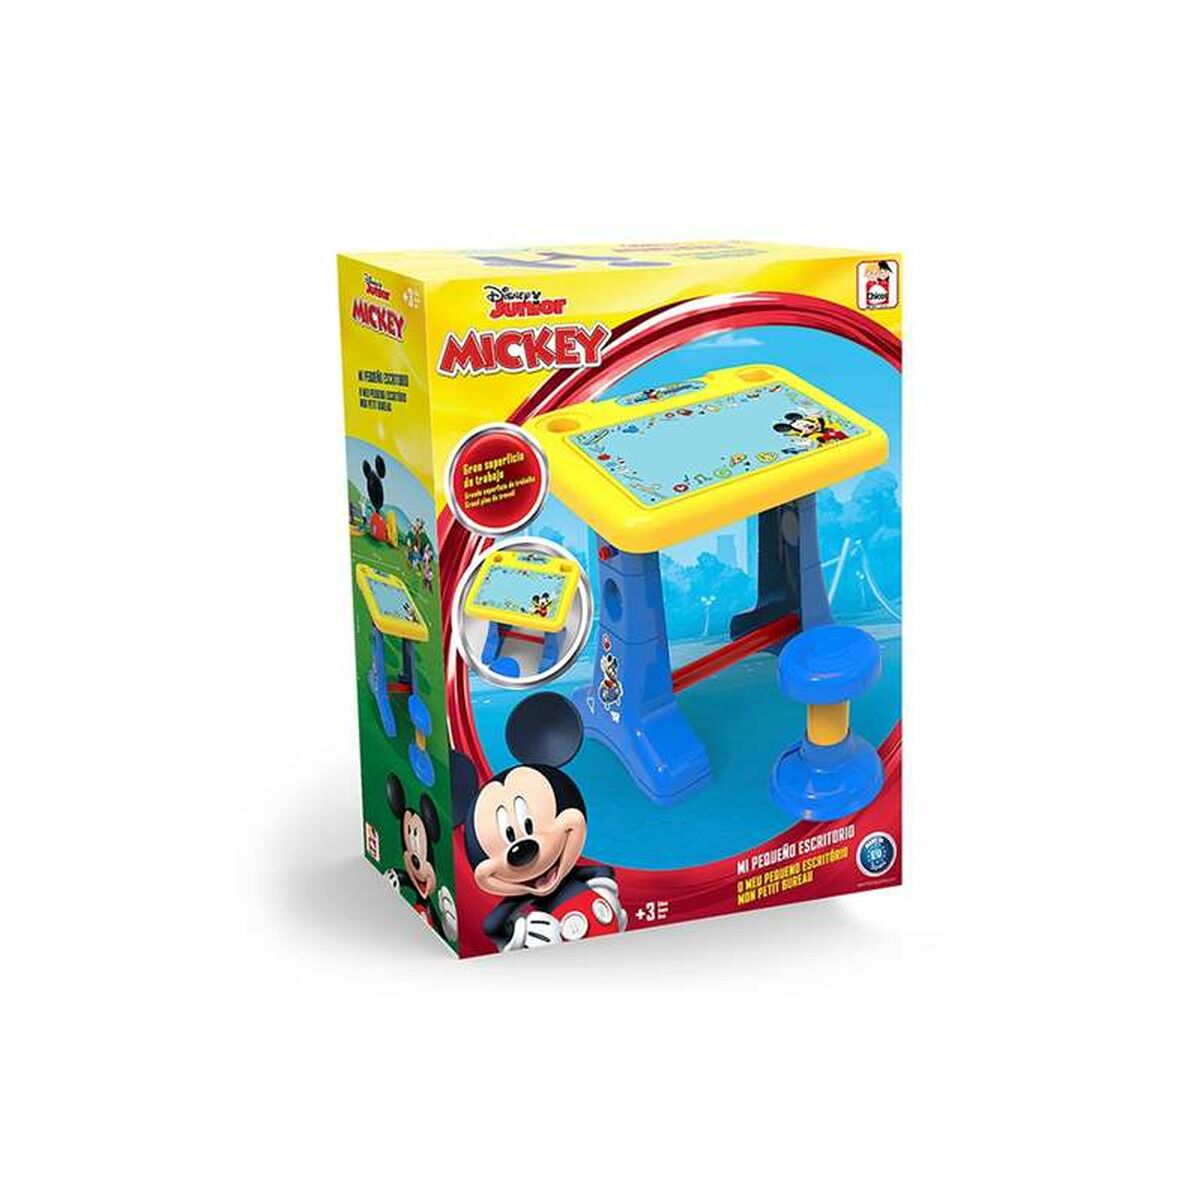 Dobbeltsidet tavle Mickey Mouse 57 x 73 x 49 cm